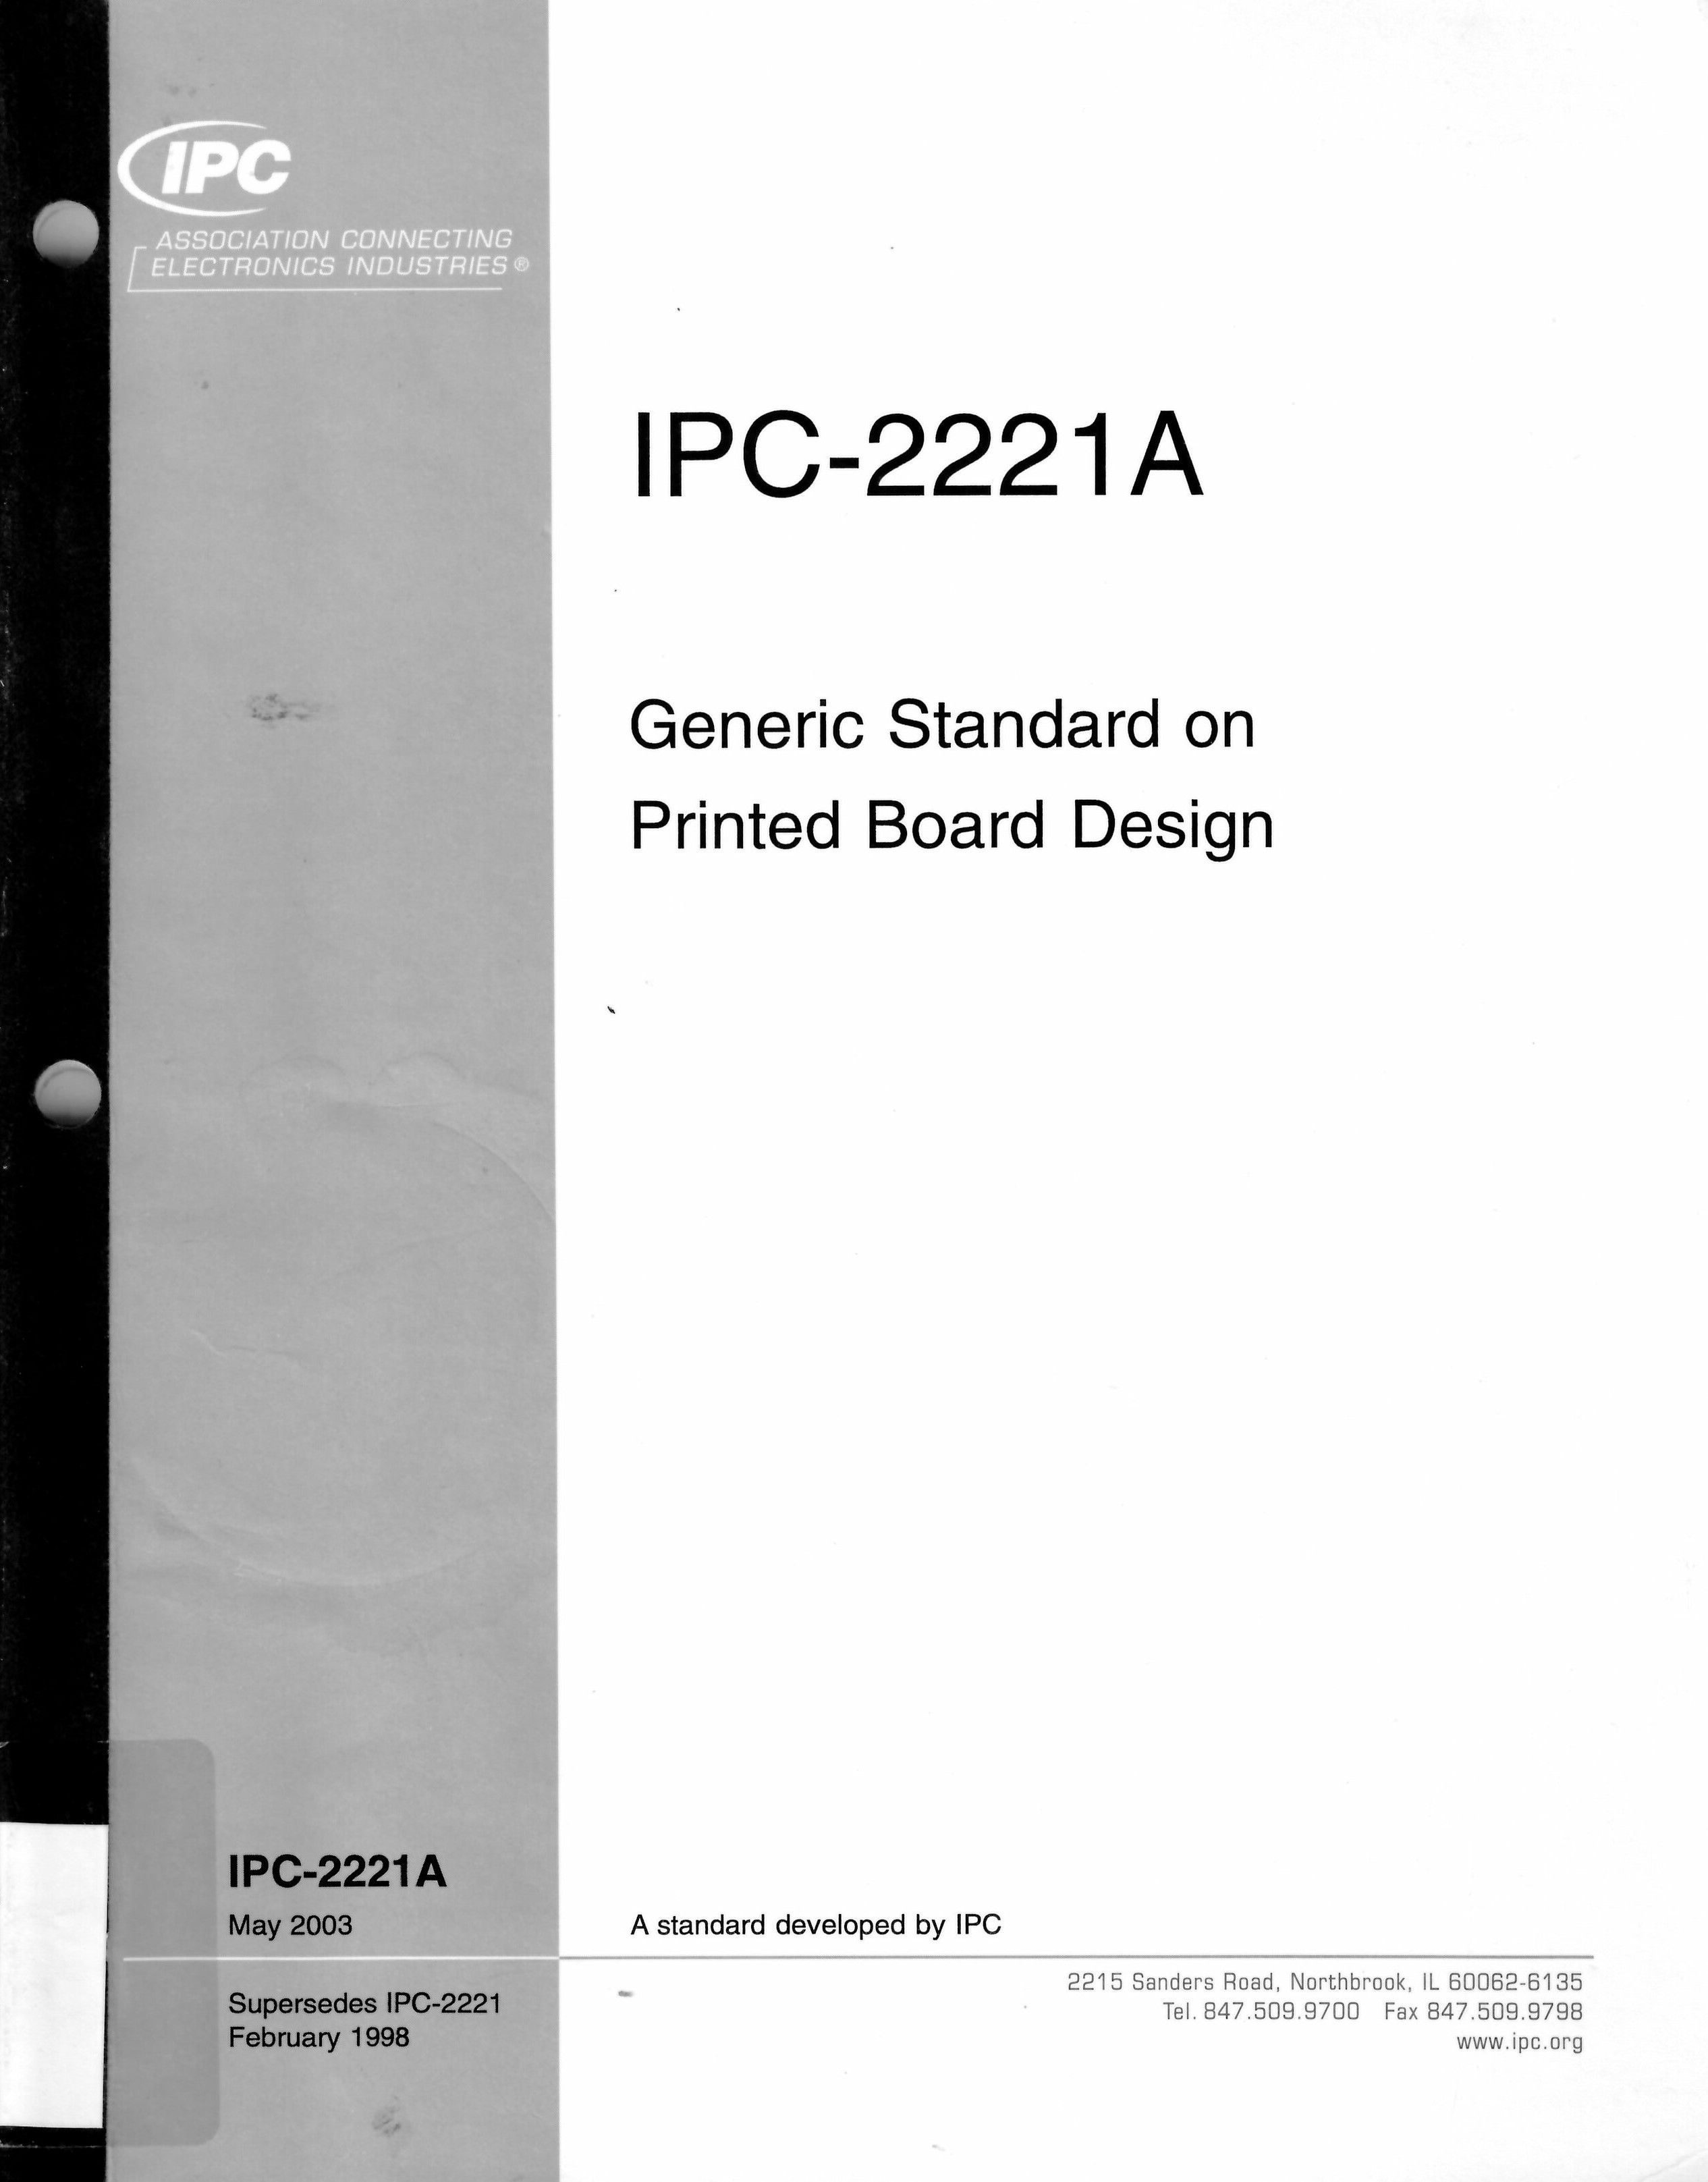 Generic standard on printed board design